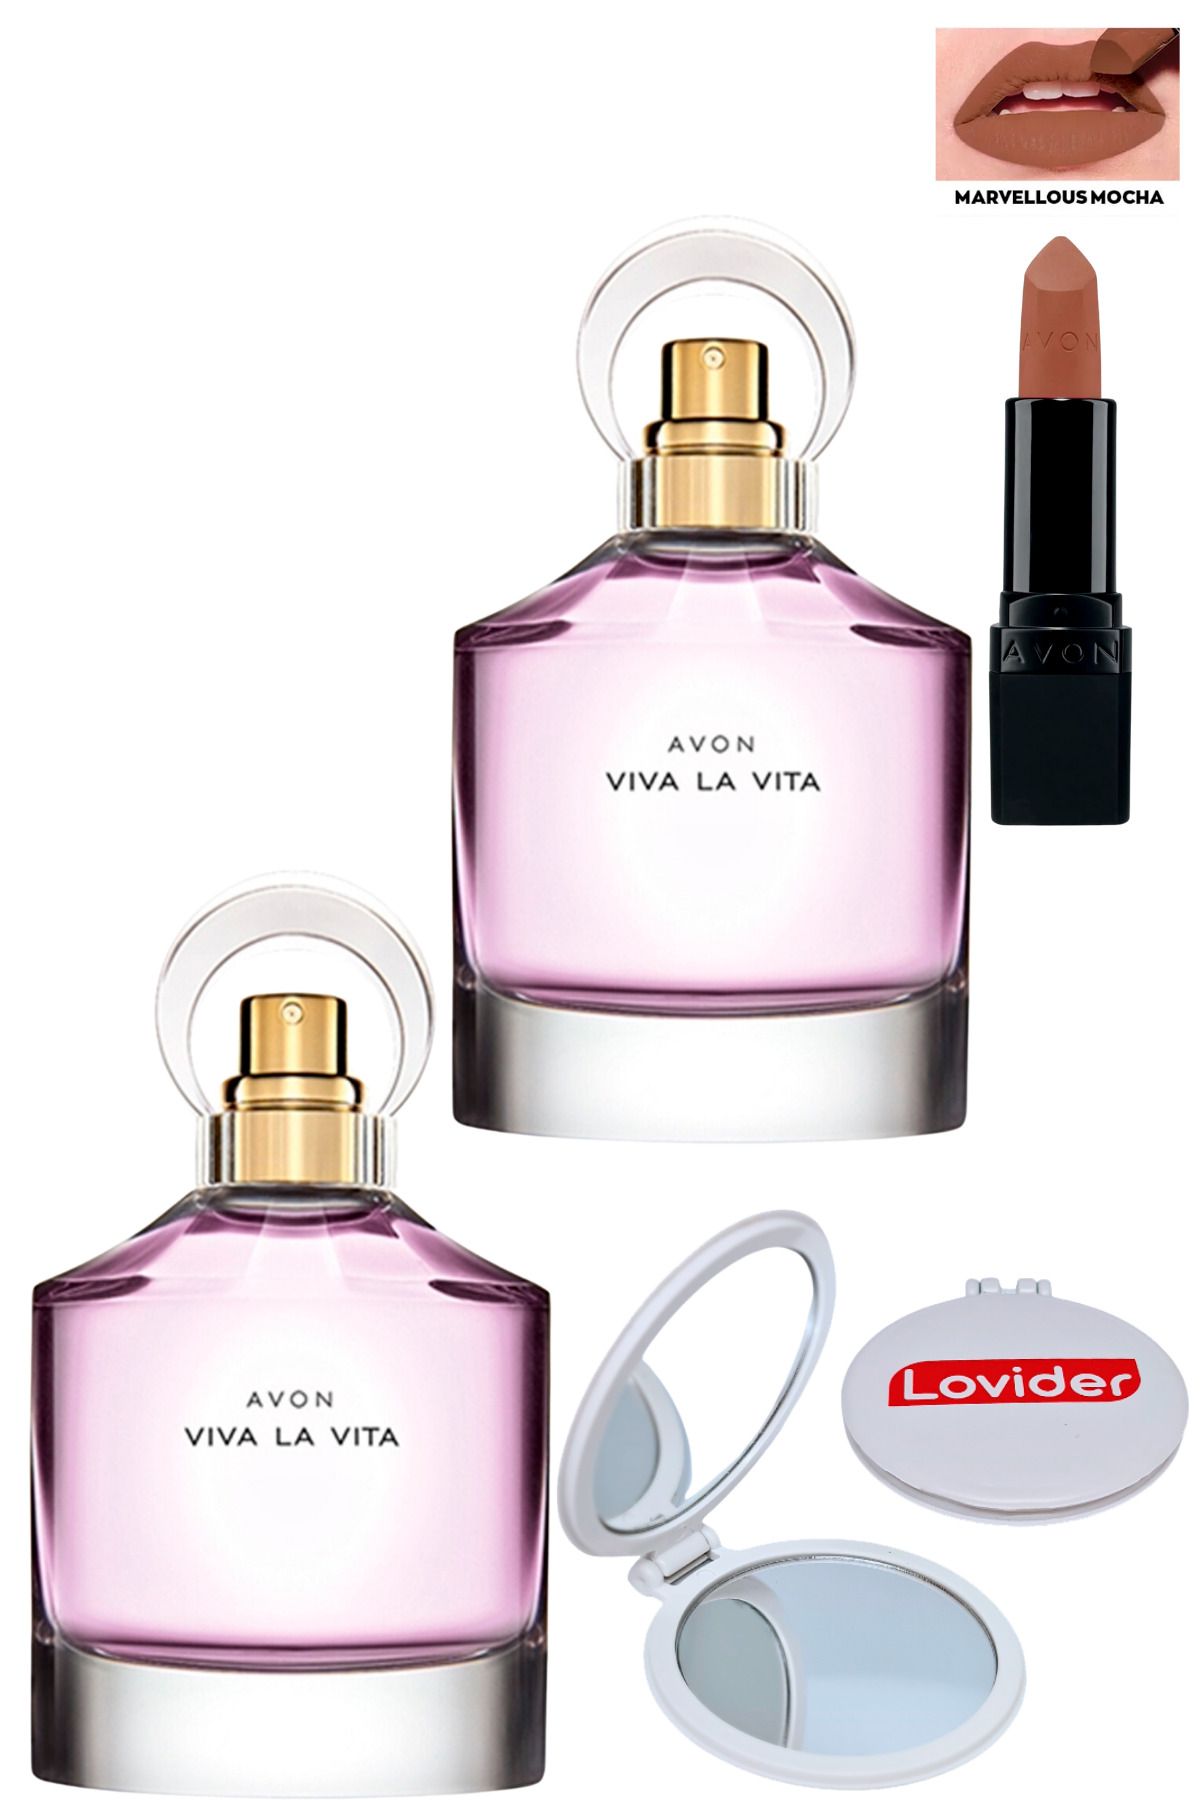 Avon Viva La Vita Kadın Parfüm EDP 50ml x 2 Adet + Marvellous Mocha Mat Ruj + Lovider Cep Aynası